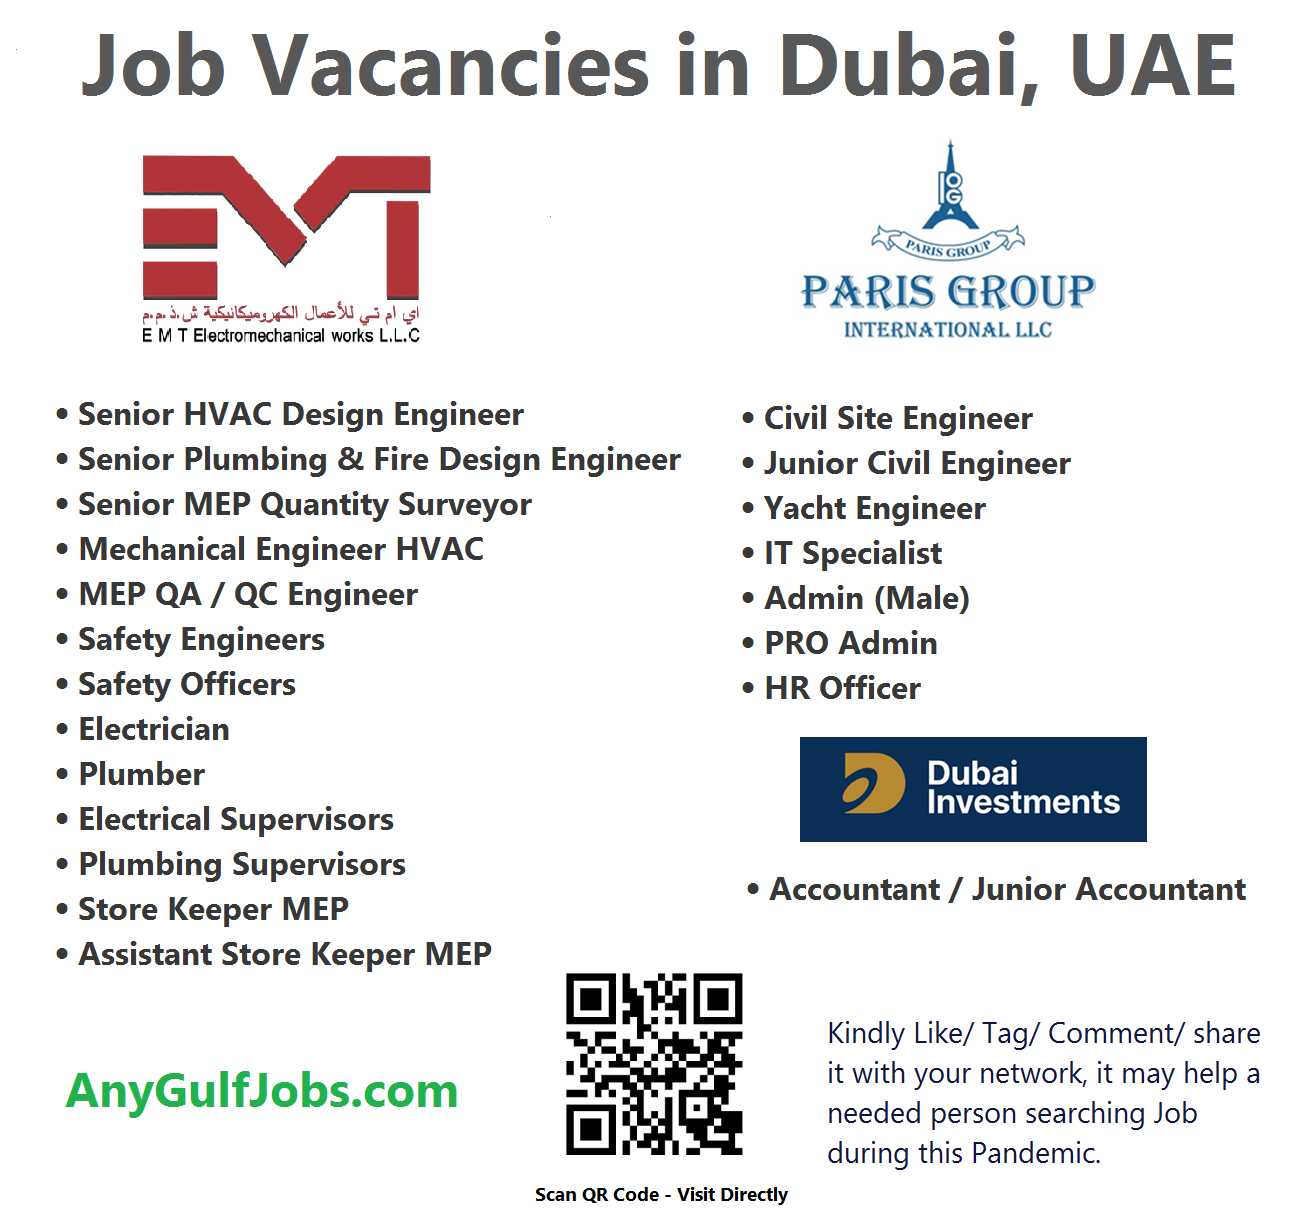 EMT Electromechanical Works L.L.C. Job Vacancies in Dubai, United Arab Emirates